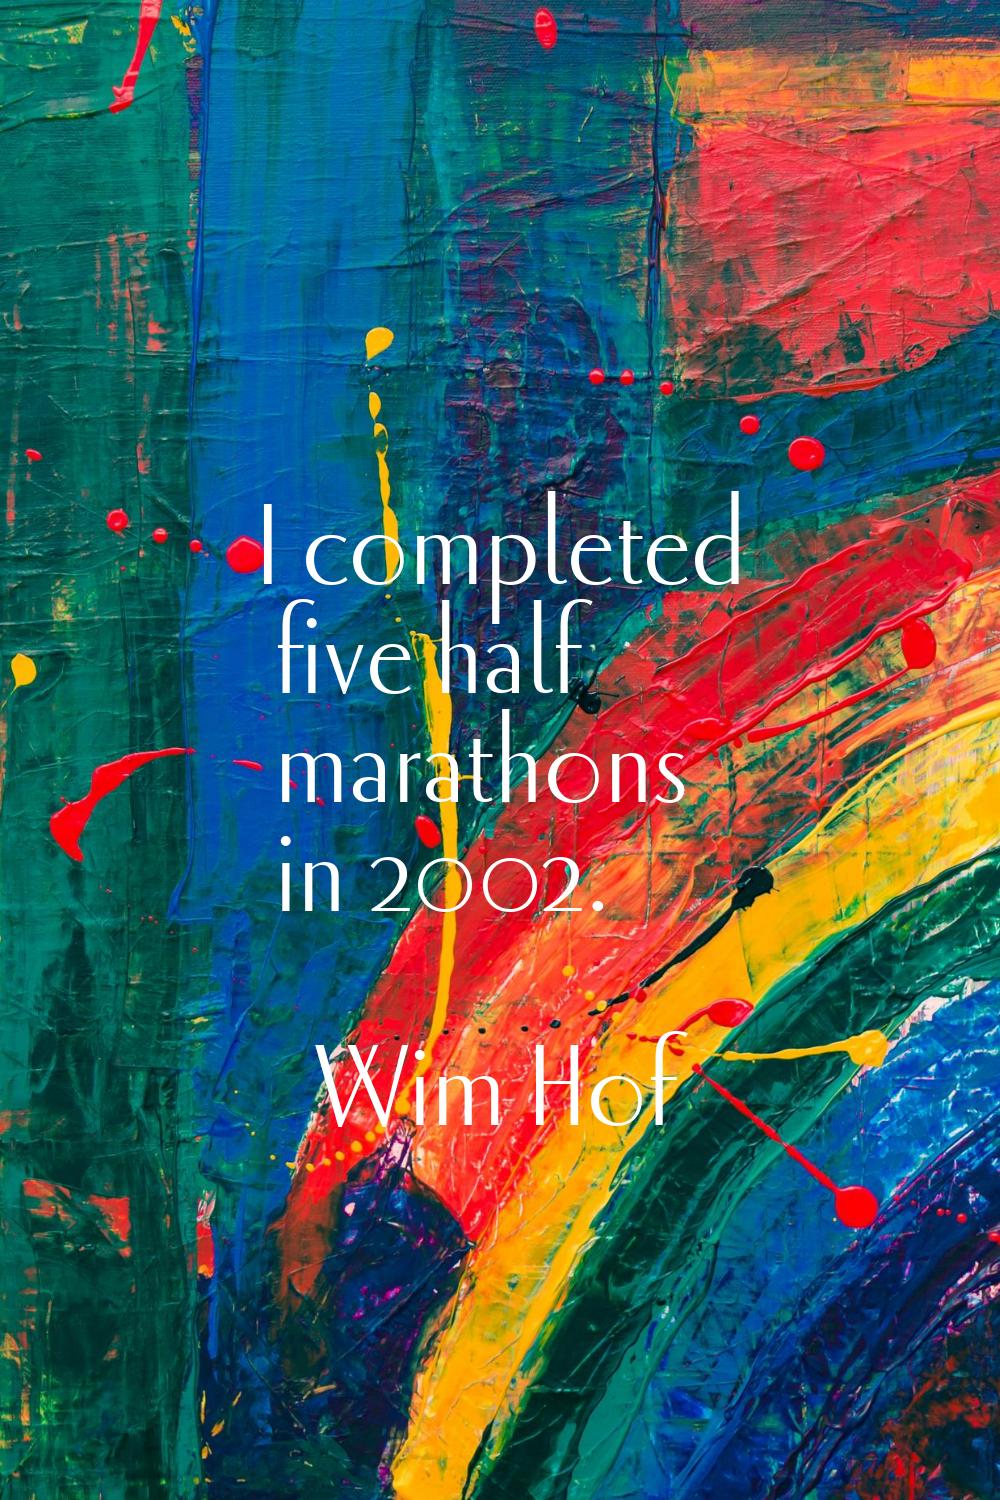 I completed five half marathons in 2002.